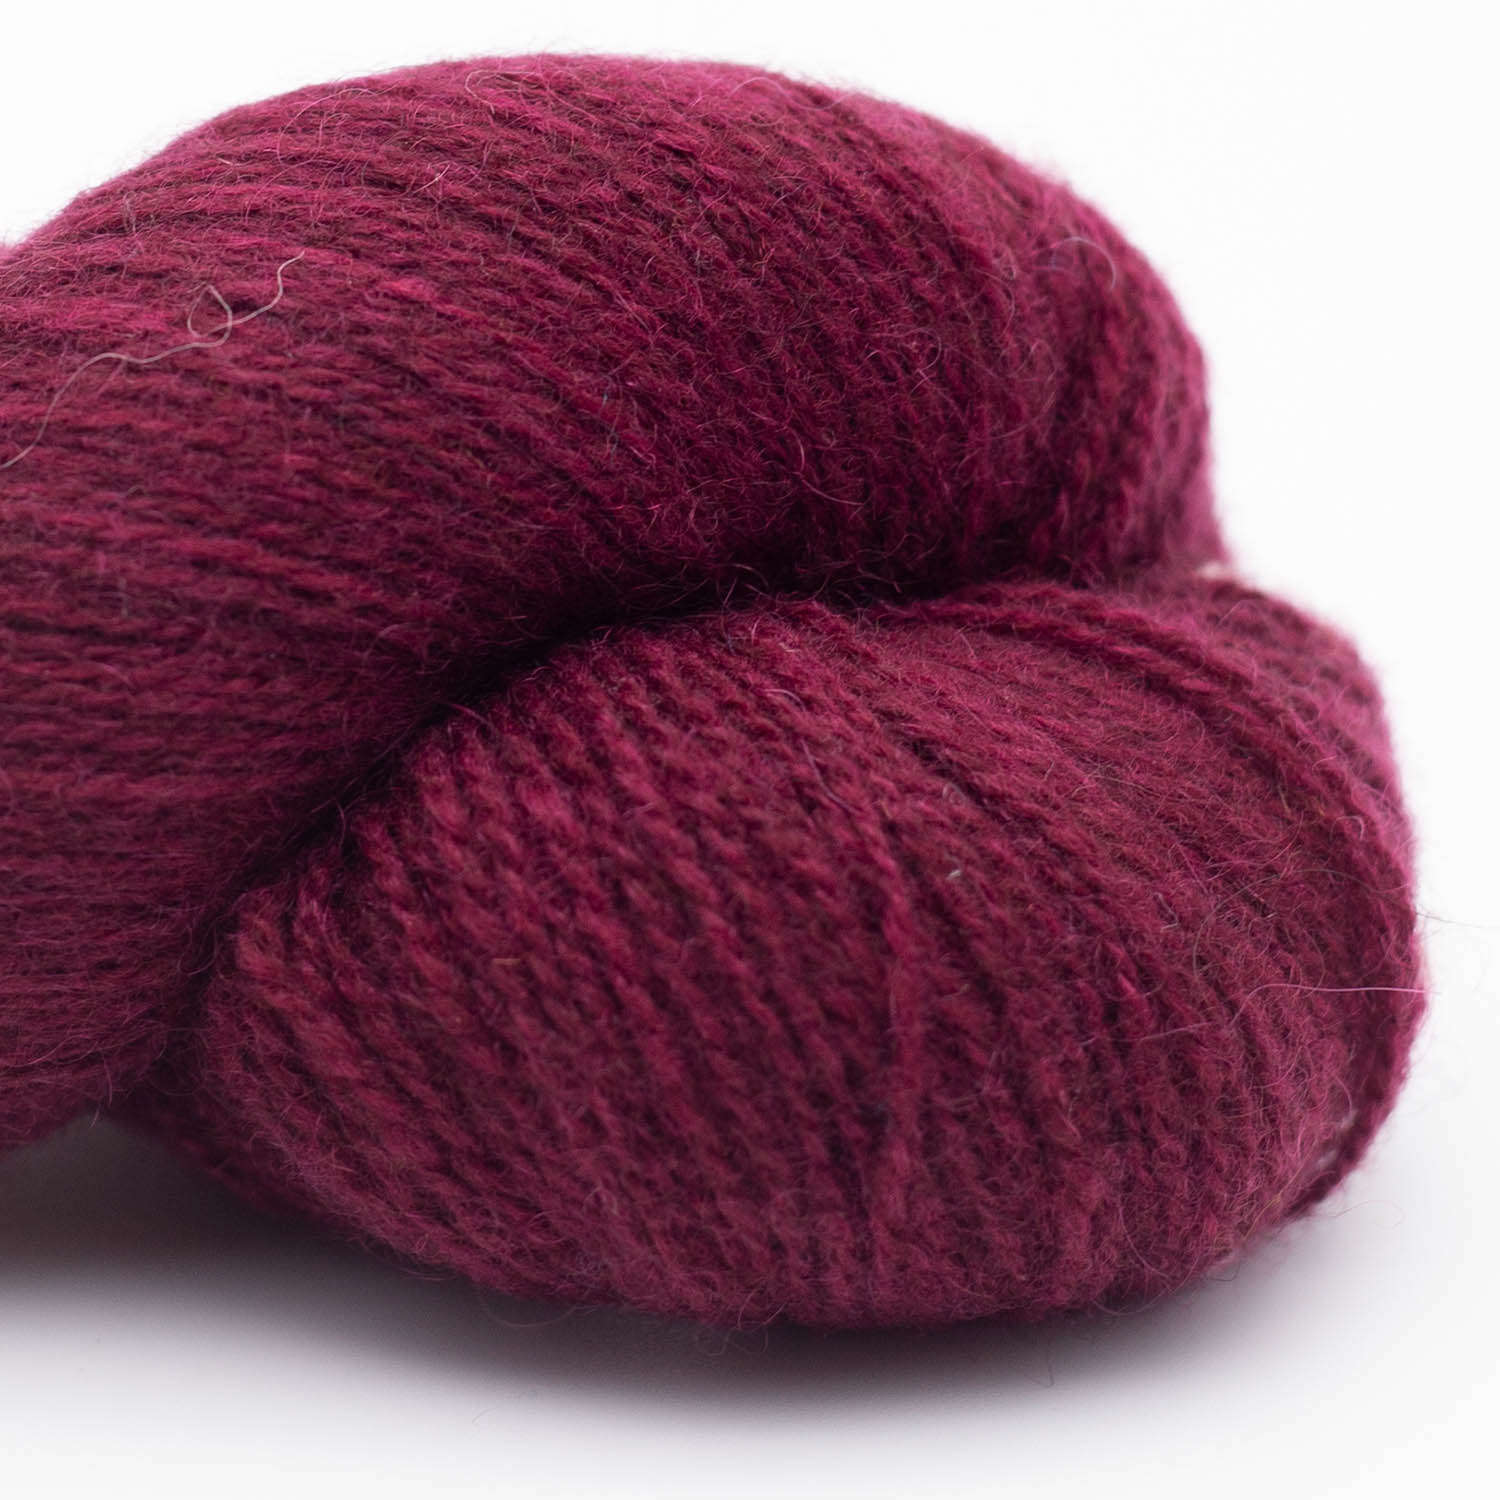 Wine Red - handspun and handdyed wool yarn